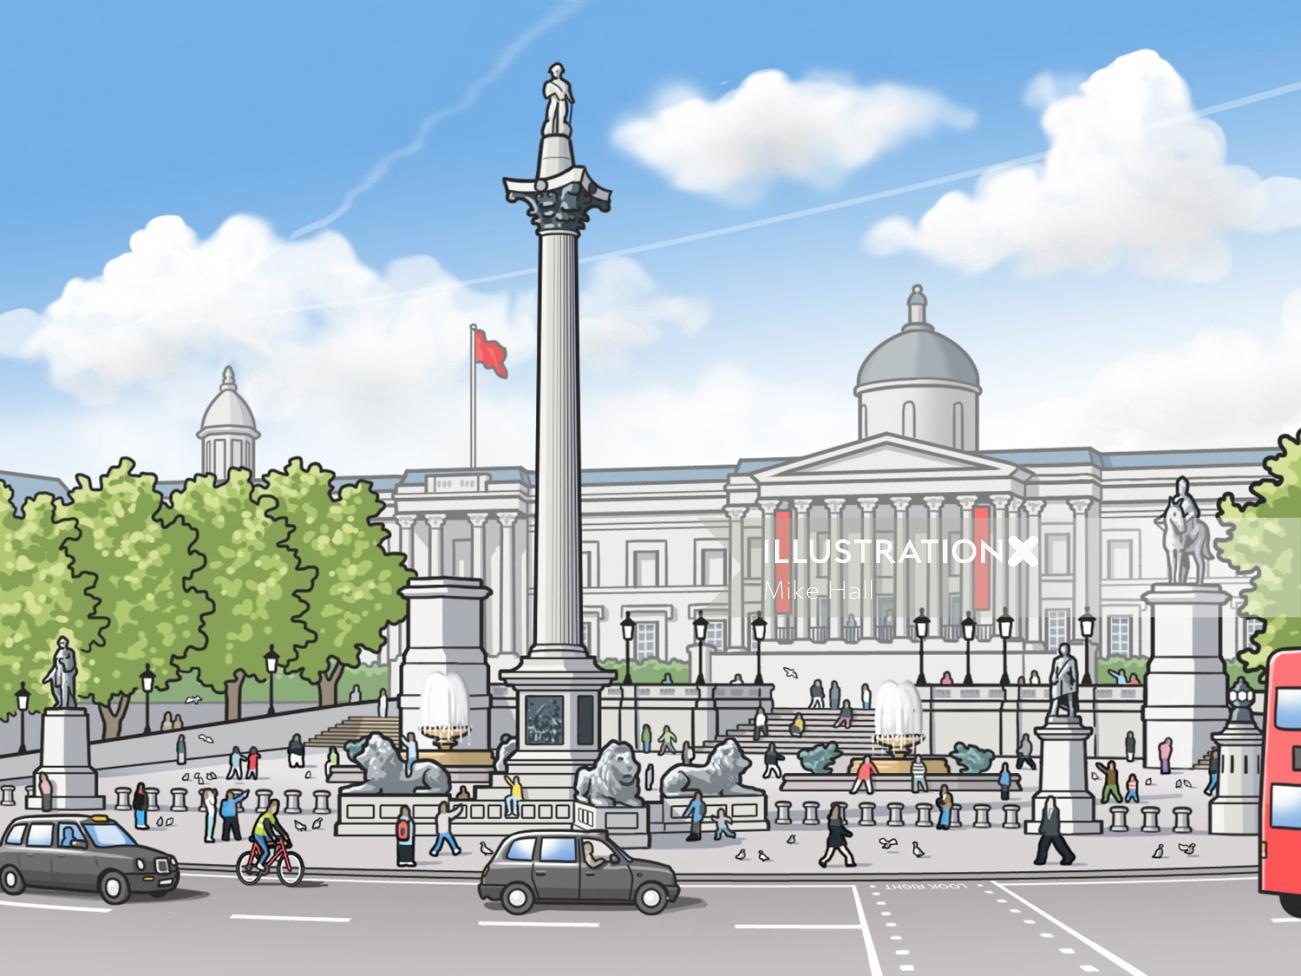 Illustration of Trafalgar Square